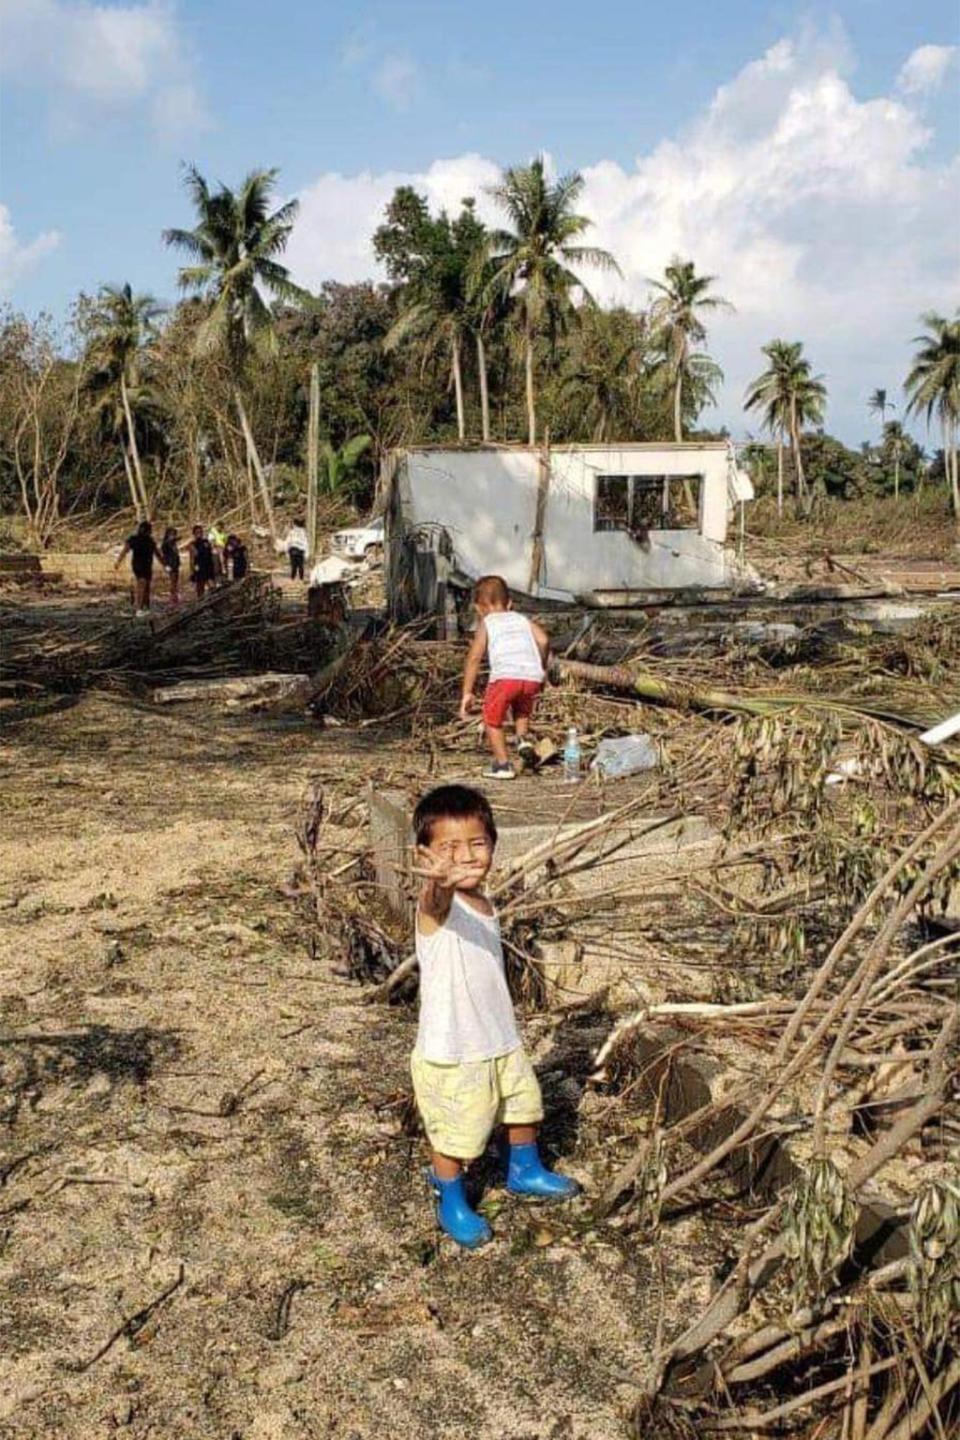 Children in Tonga’s capital amid debris left in the tsunami’s wake (Consulate of the Kingdom of Tonga)